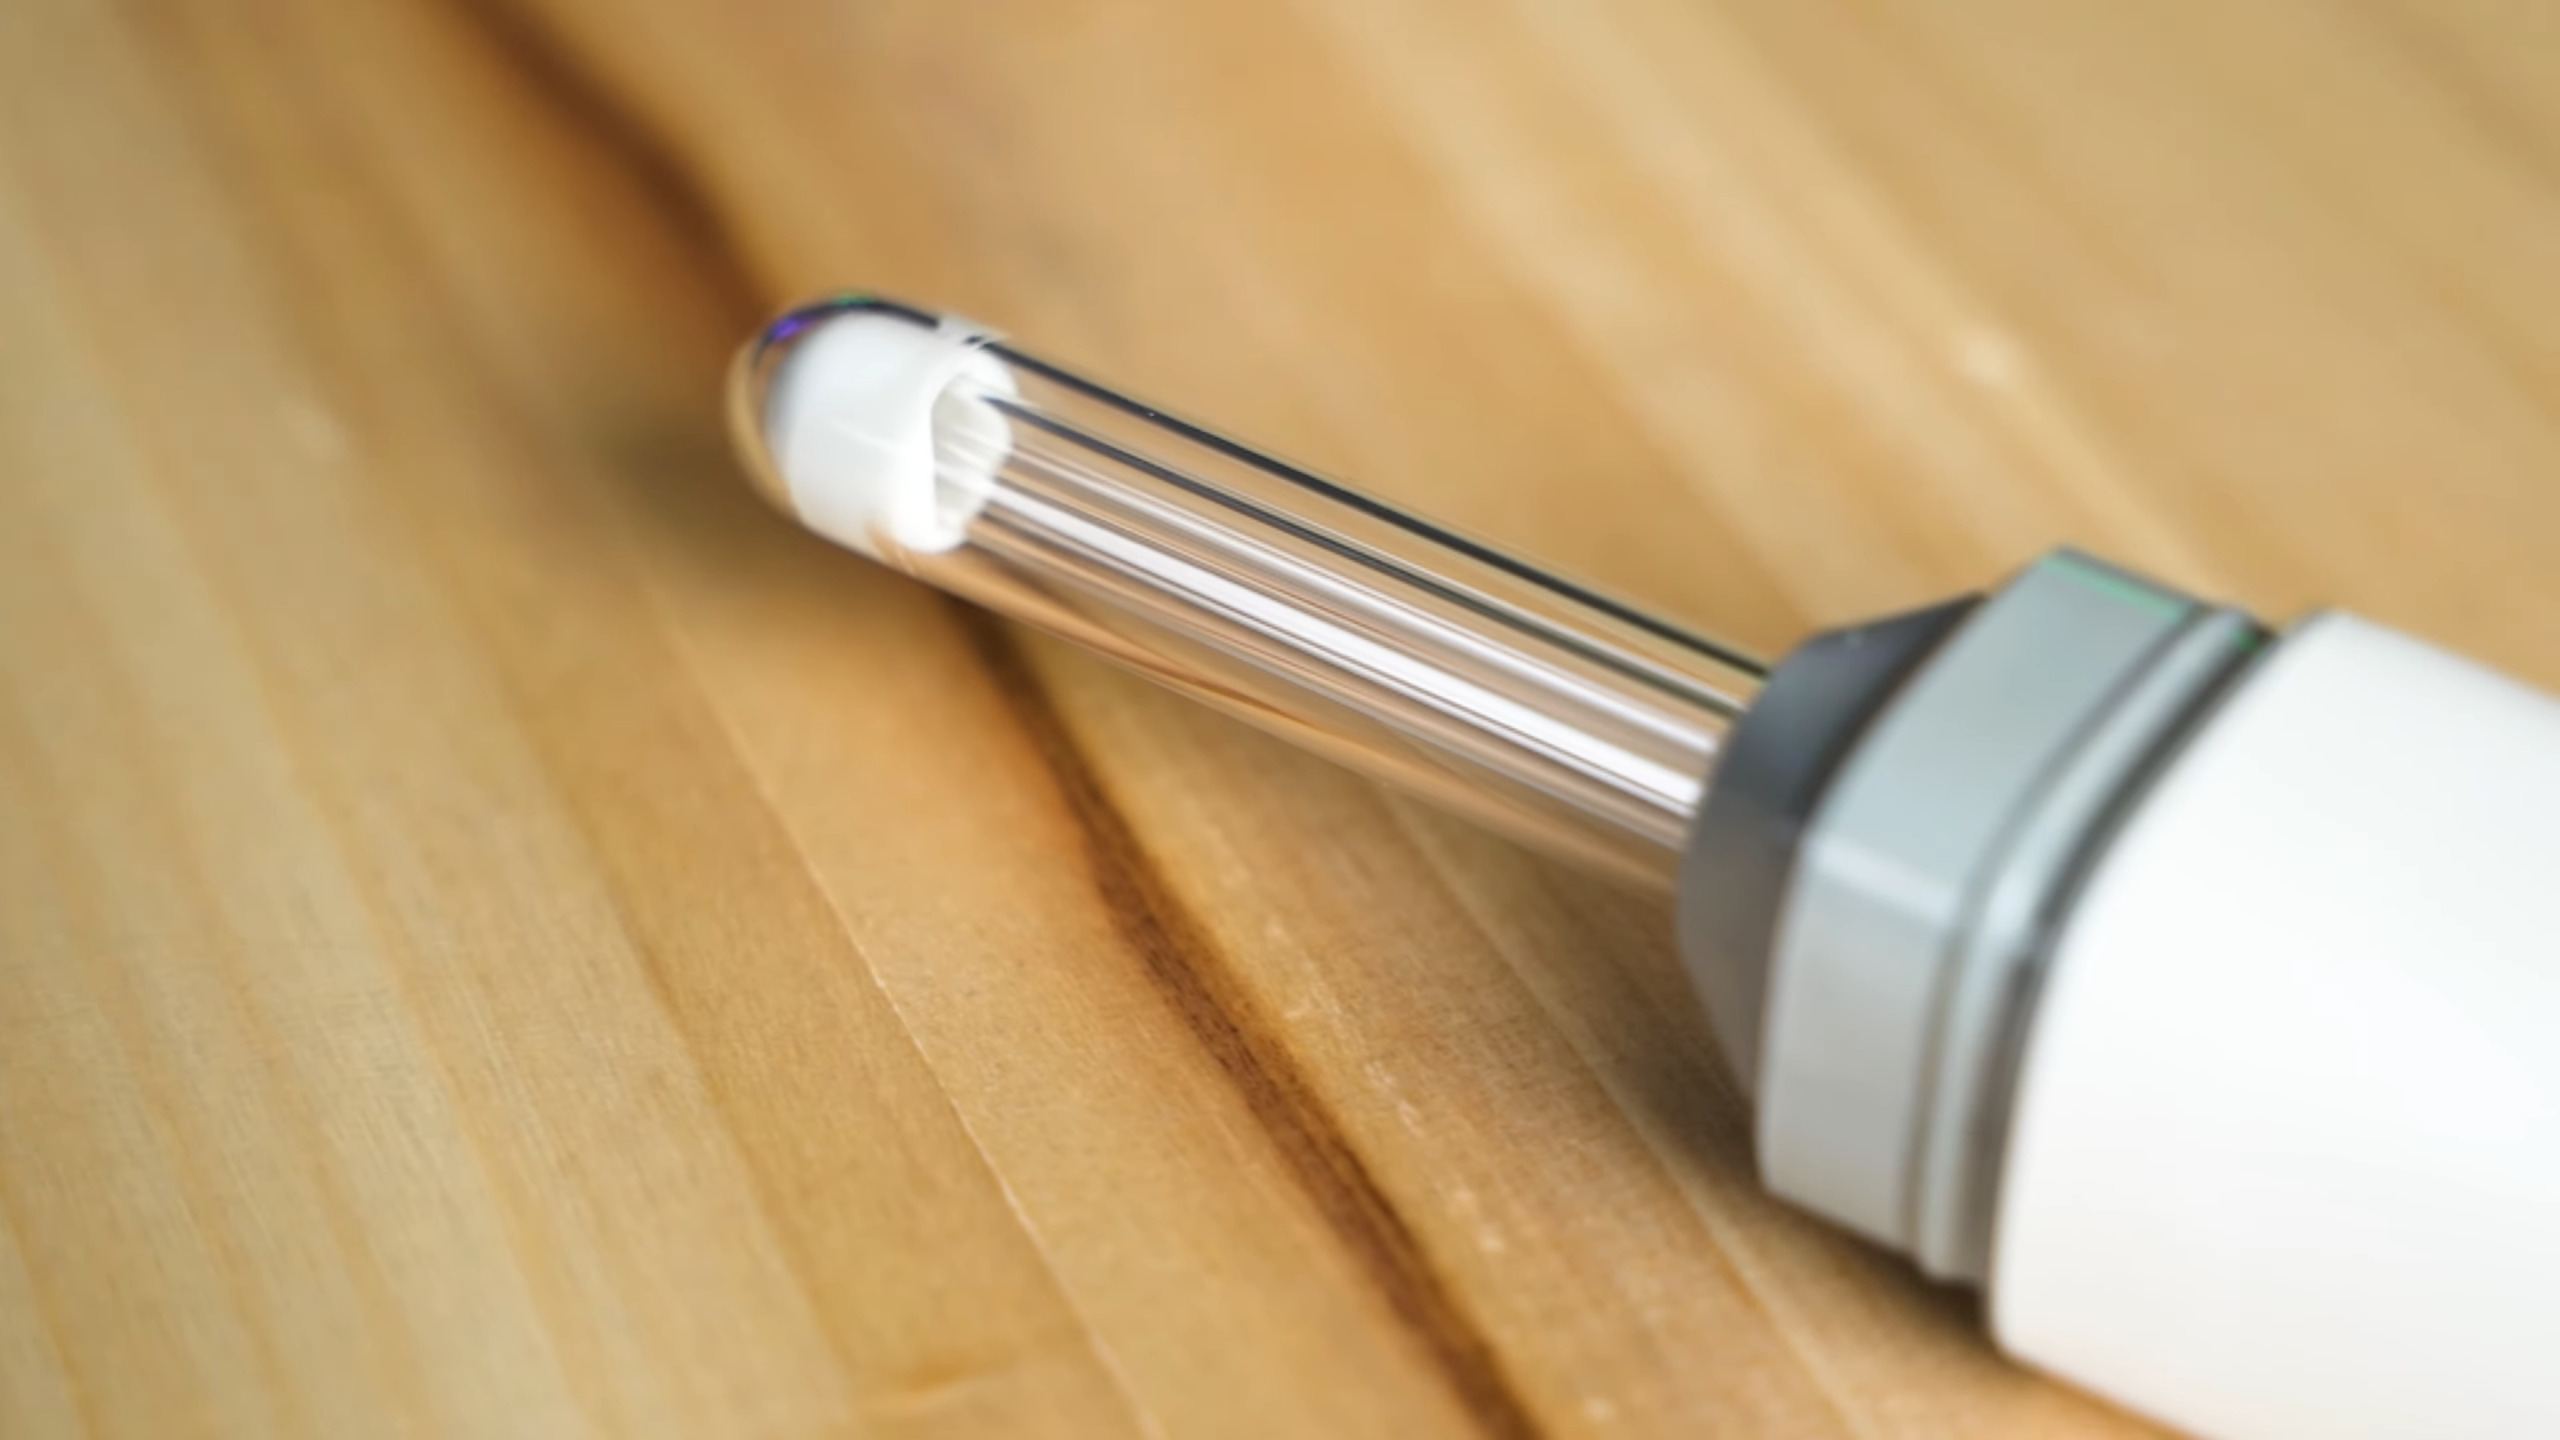 Petoneer UV Sanitizing Pen